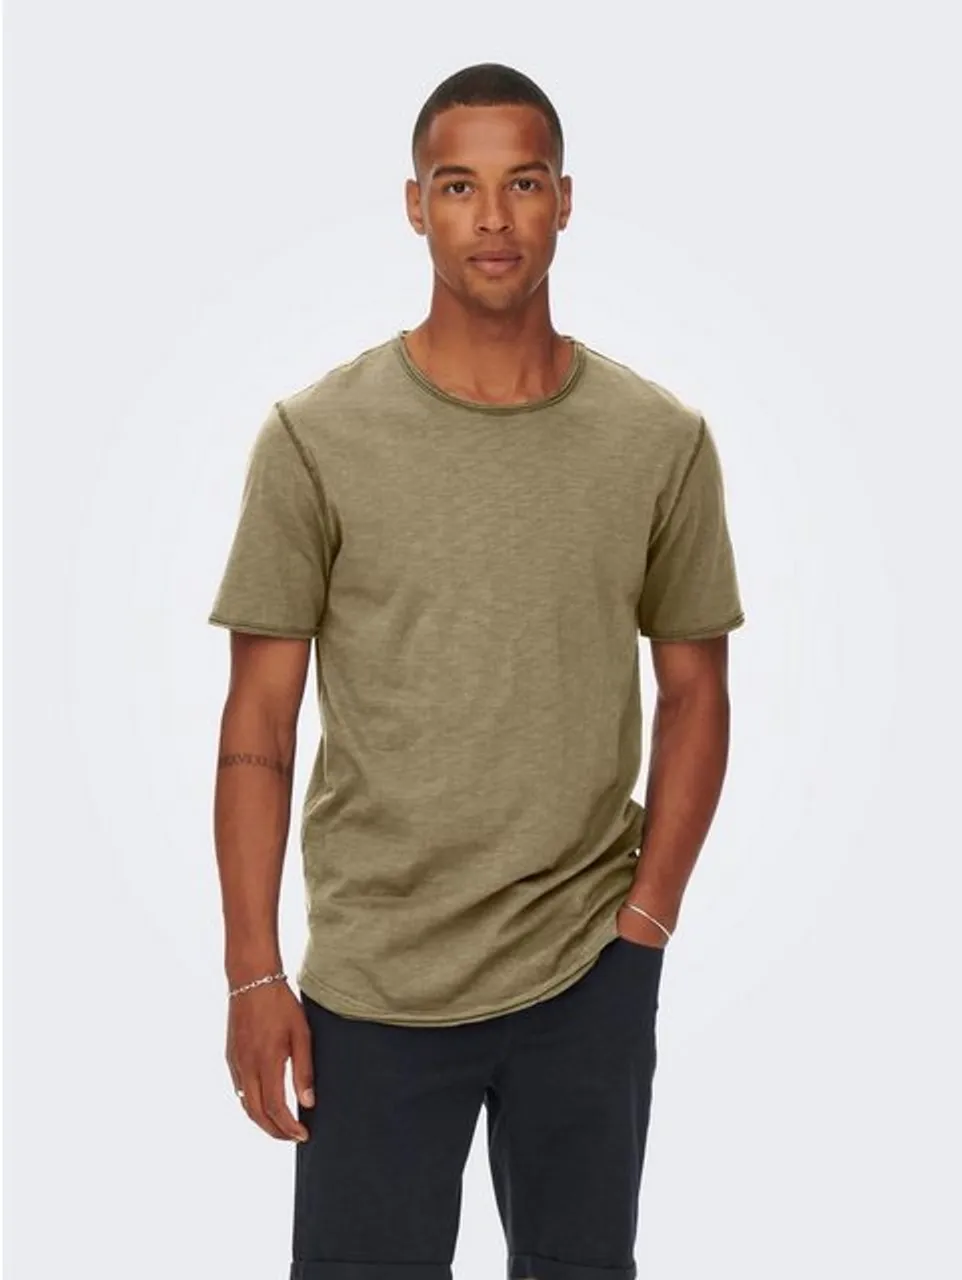 ONLY & SONS T-Shirt Langes Rundhals T-Shirt Einfarbiges Kurzarm Basic Shirt ONSBENNE 4783 in Beige